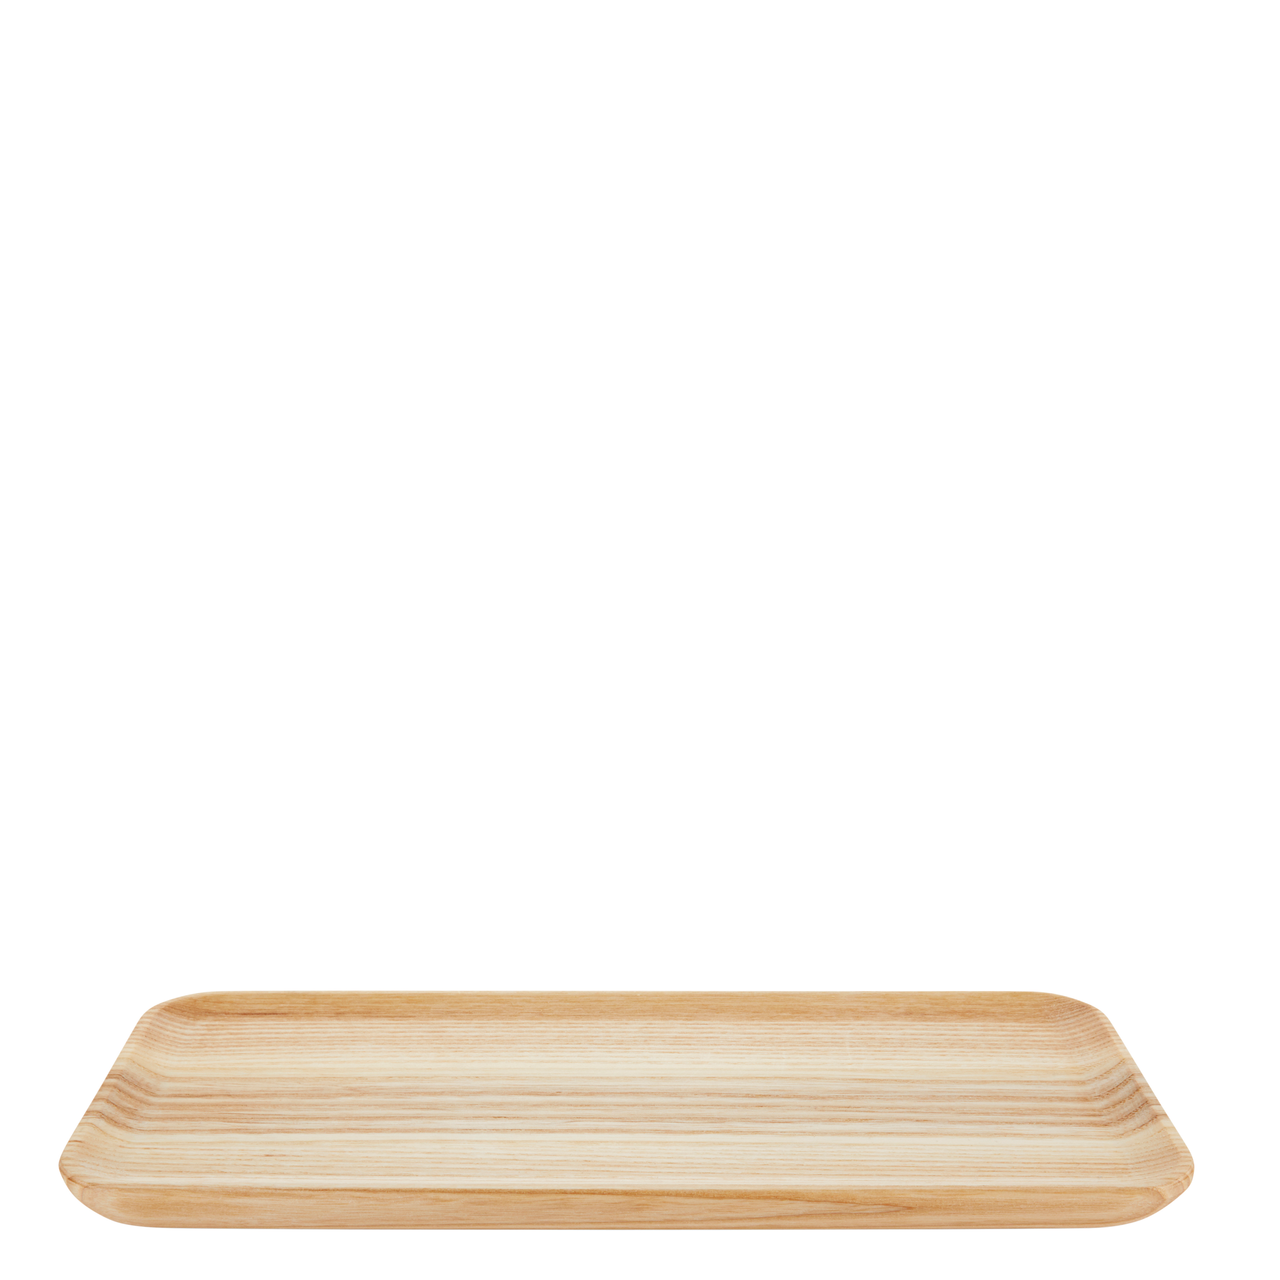 Tray wood (ashwood) rectangular 27x13cm